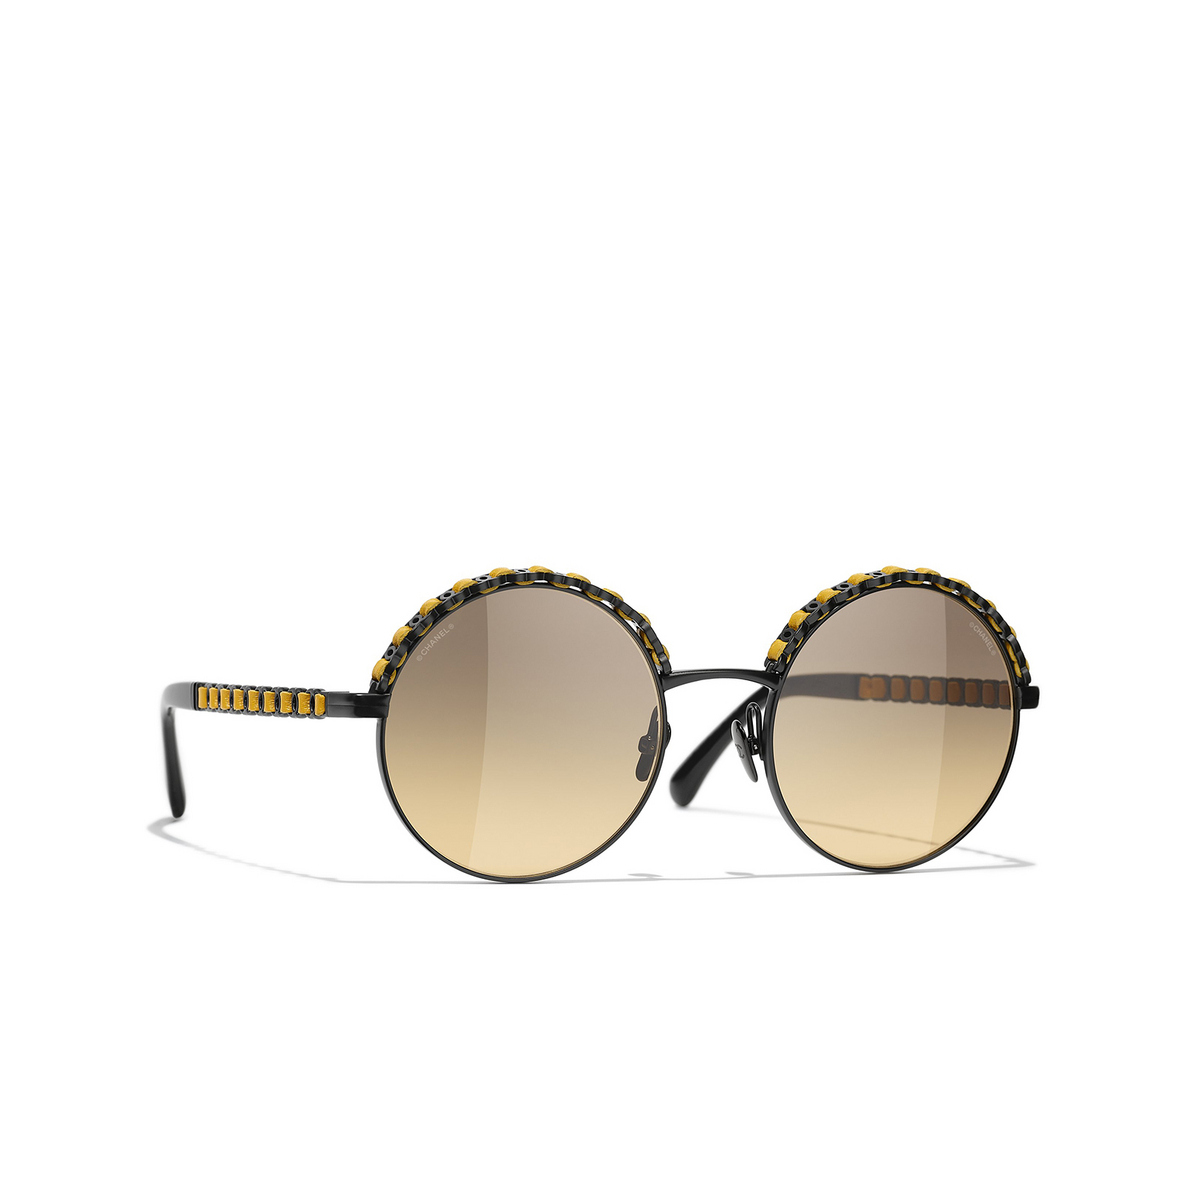 CHANEL round Sunglasses C10111 Black & Yellow - three-quarters view